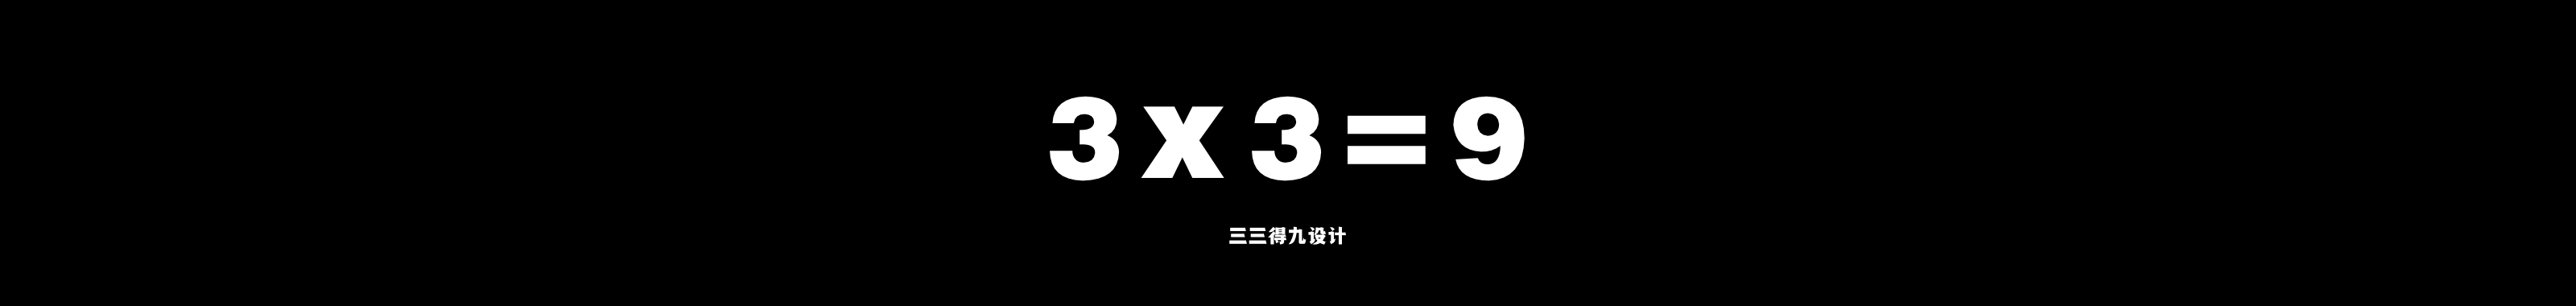 3X3=9 三三得九 Design's profile banner